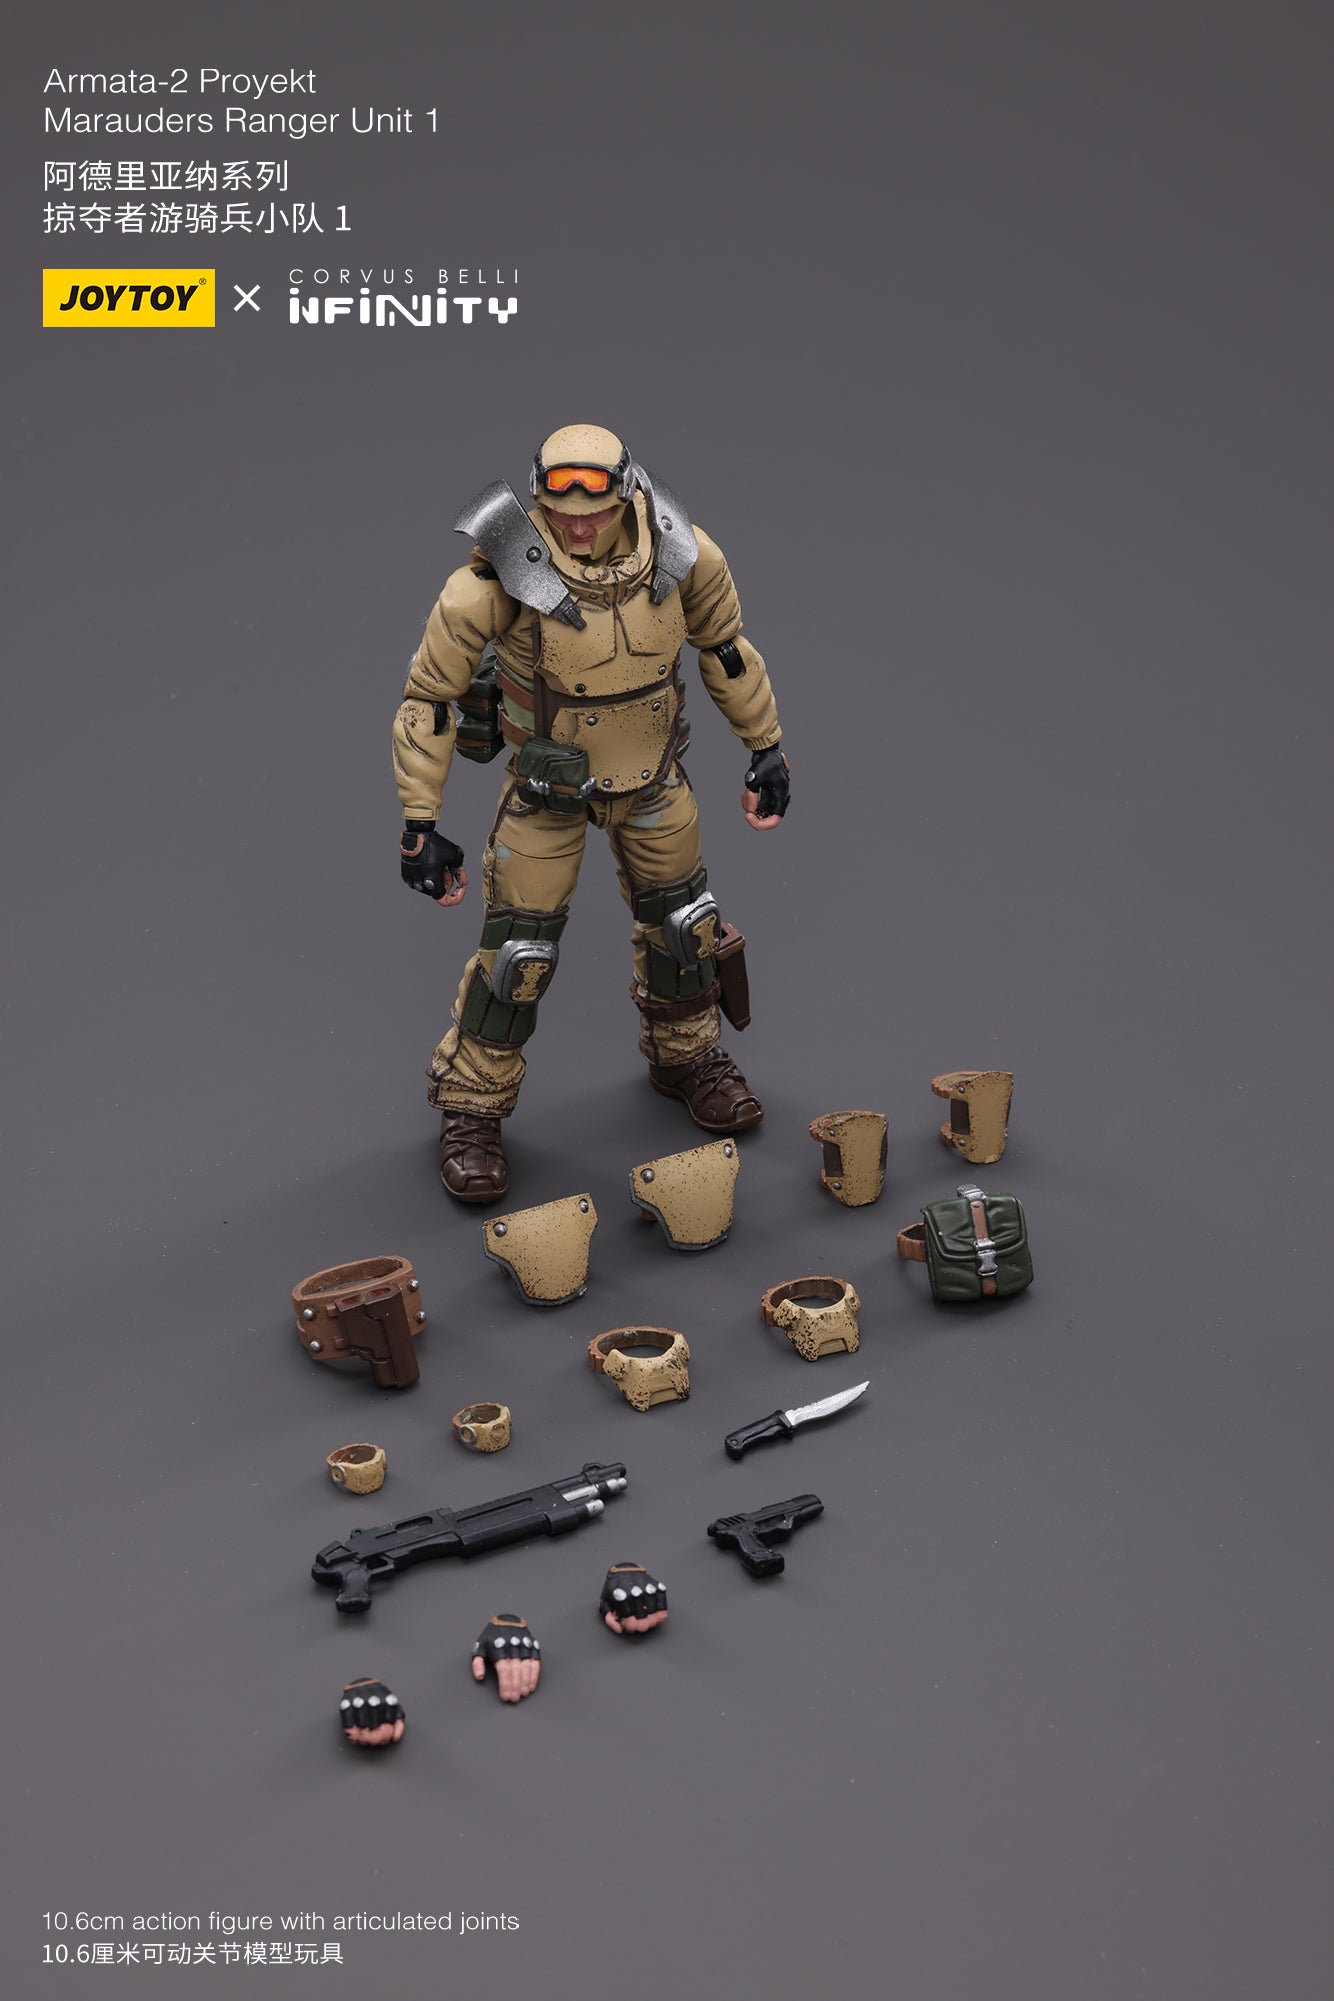 Armata-2 Proyekt Marauders Ranger Unit 1- Action Figure By JOYTOY